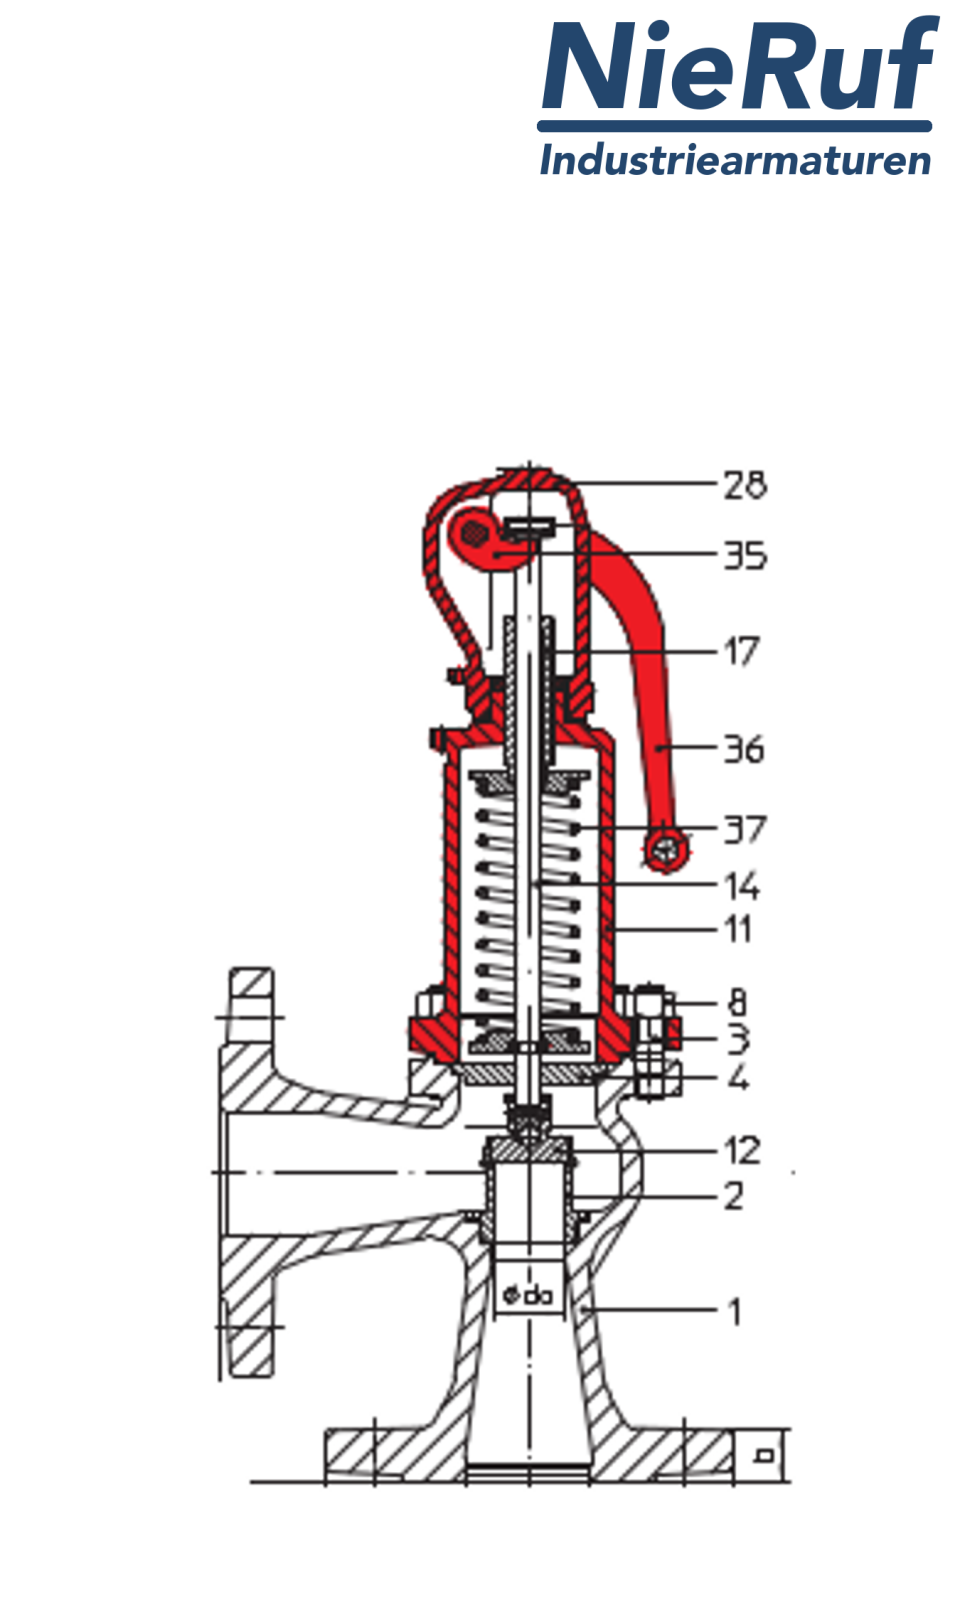 flange-safety valve DN32/DN32 SF01, cast iron EN-JL1040 FPM, with lever